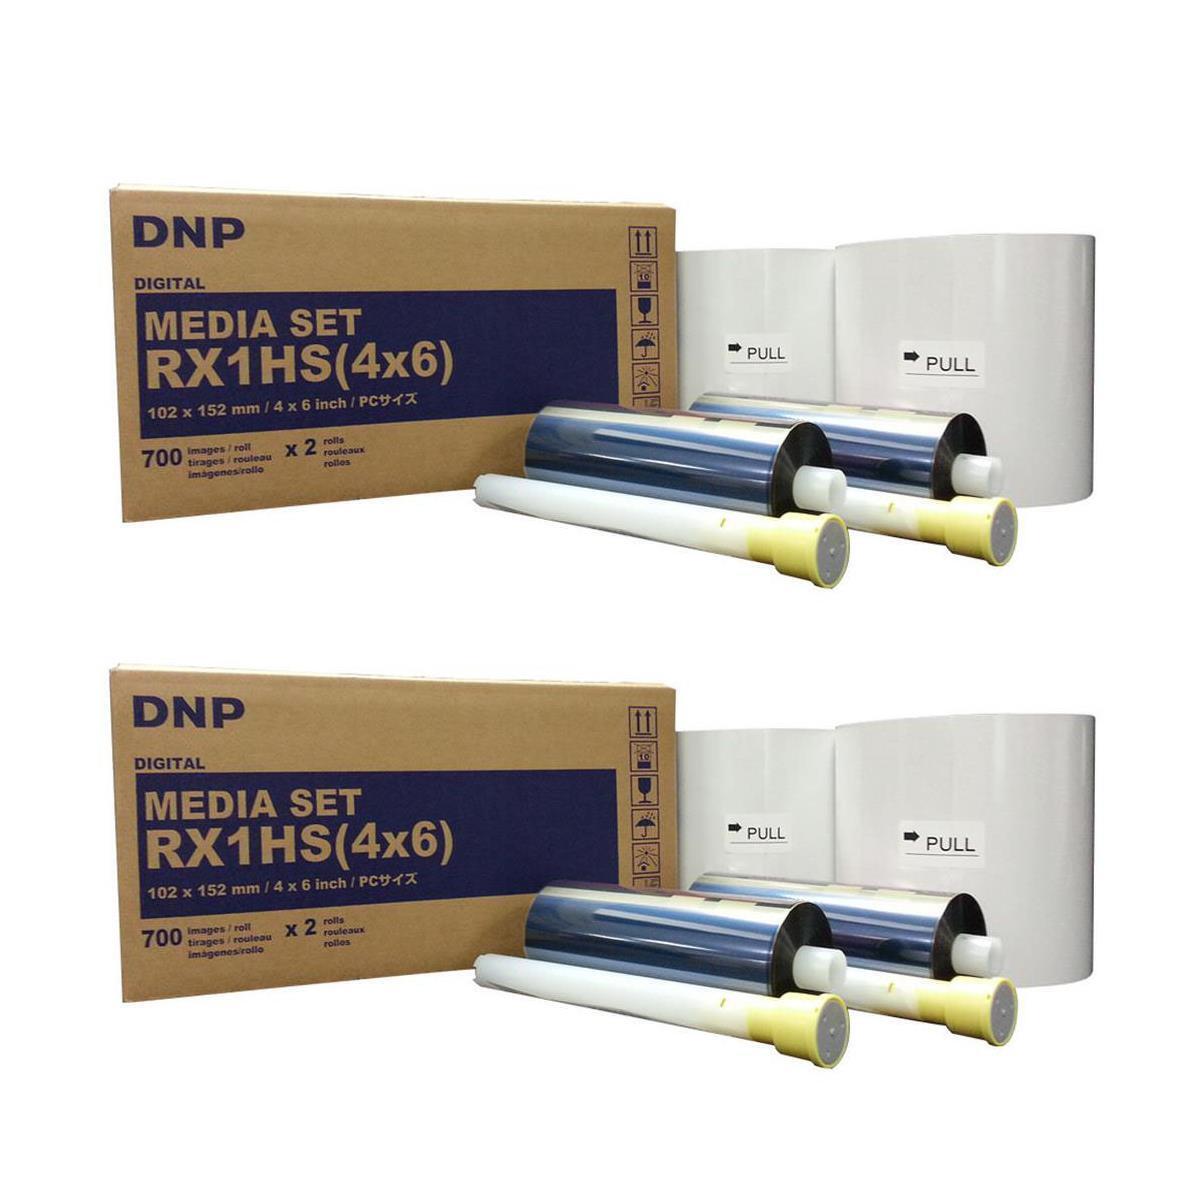 DNP 2x Print Media for DS-RX1HS Printer - 4x6 700 Prints Per Roll (1400 Total)